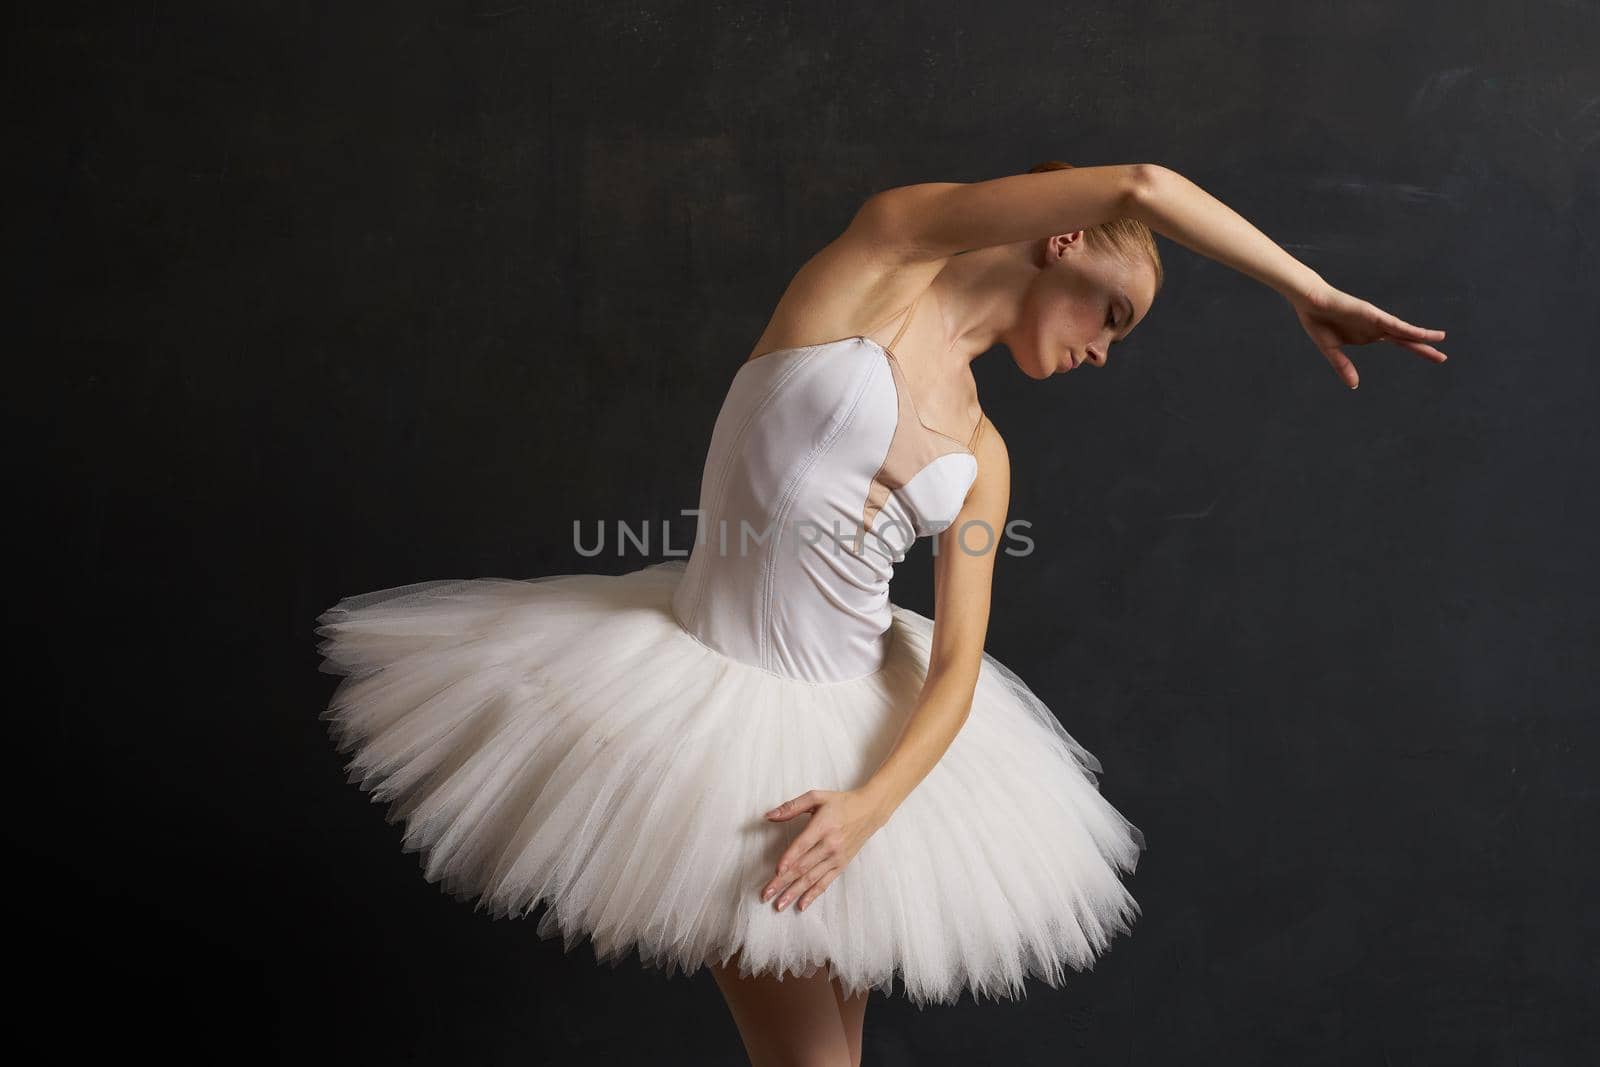 ballerina in a white tutu dance performance silhouette dark background. High quality photo